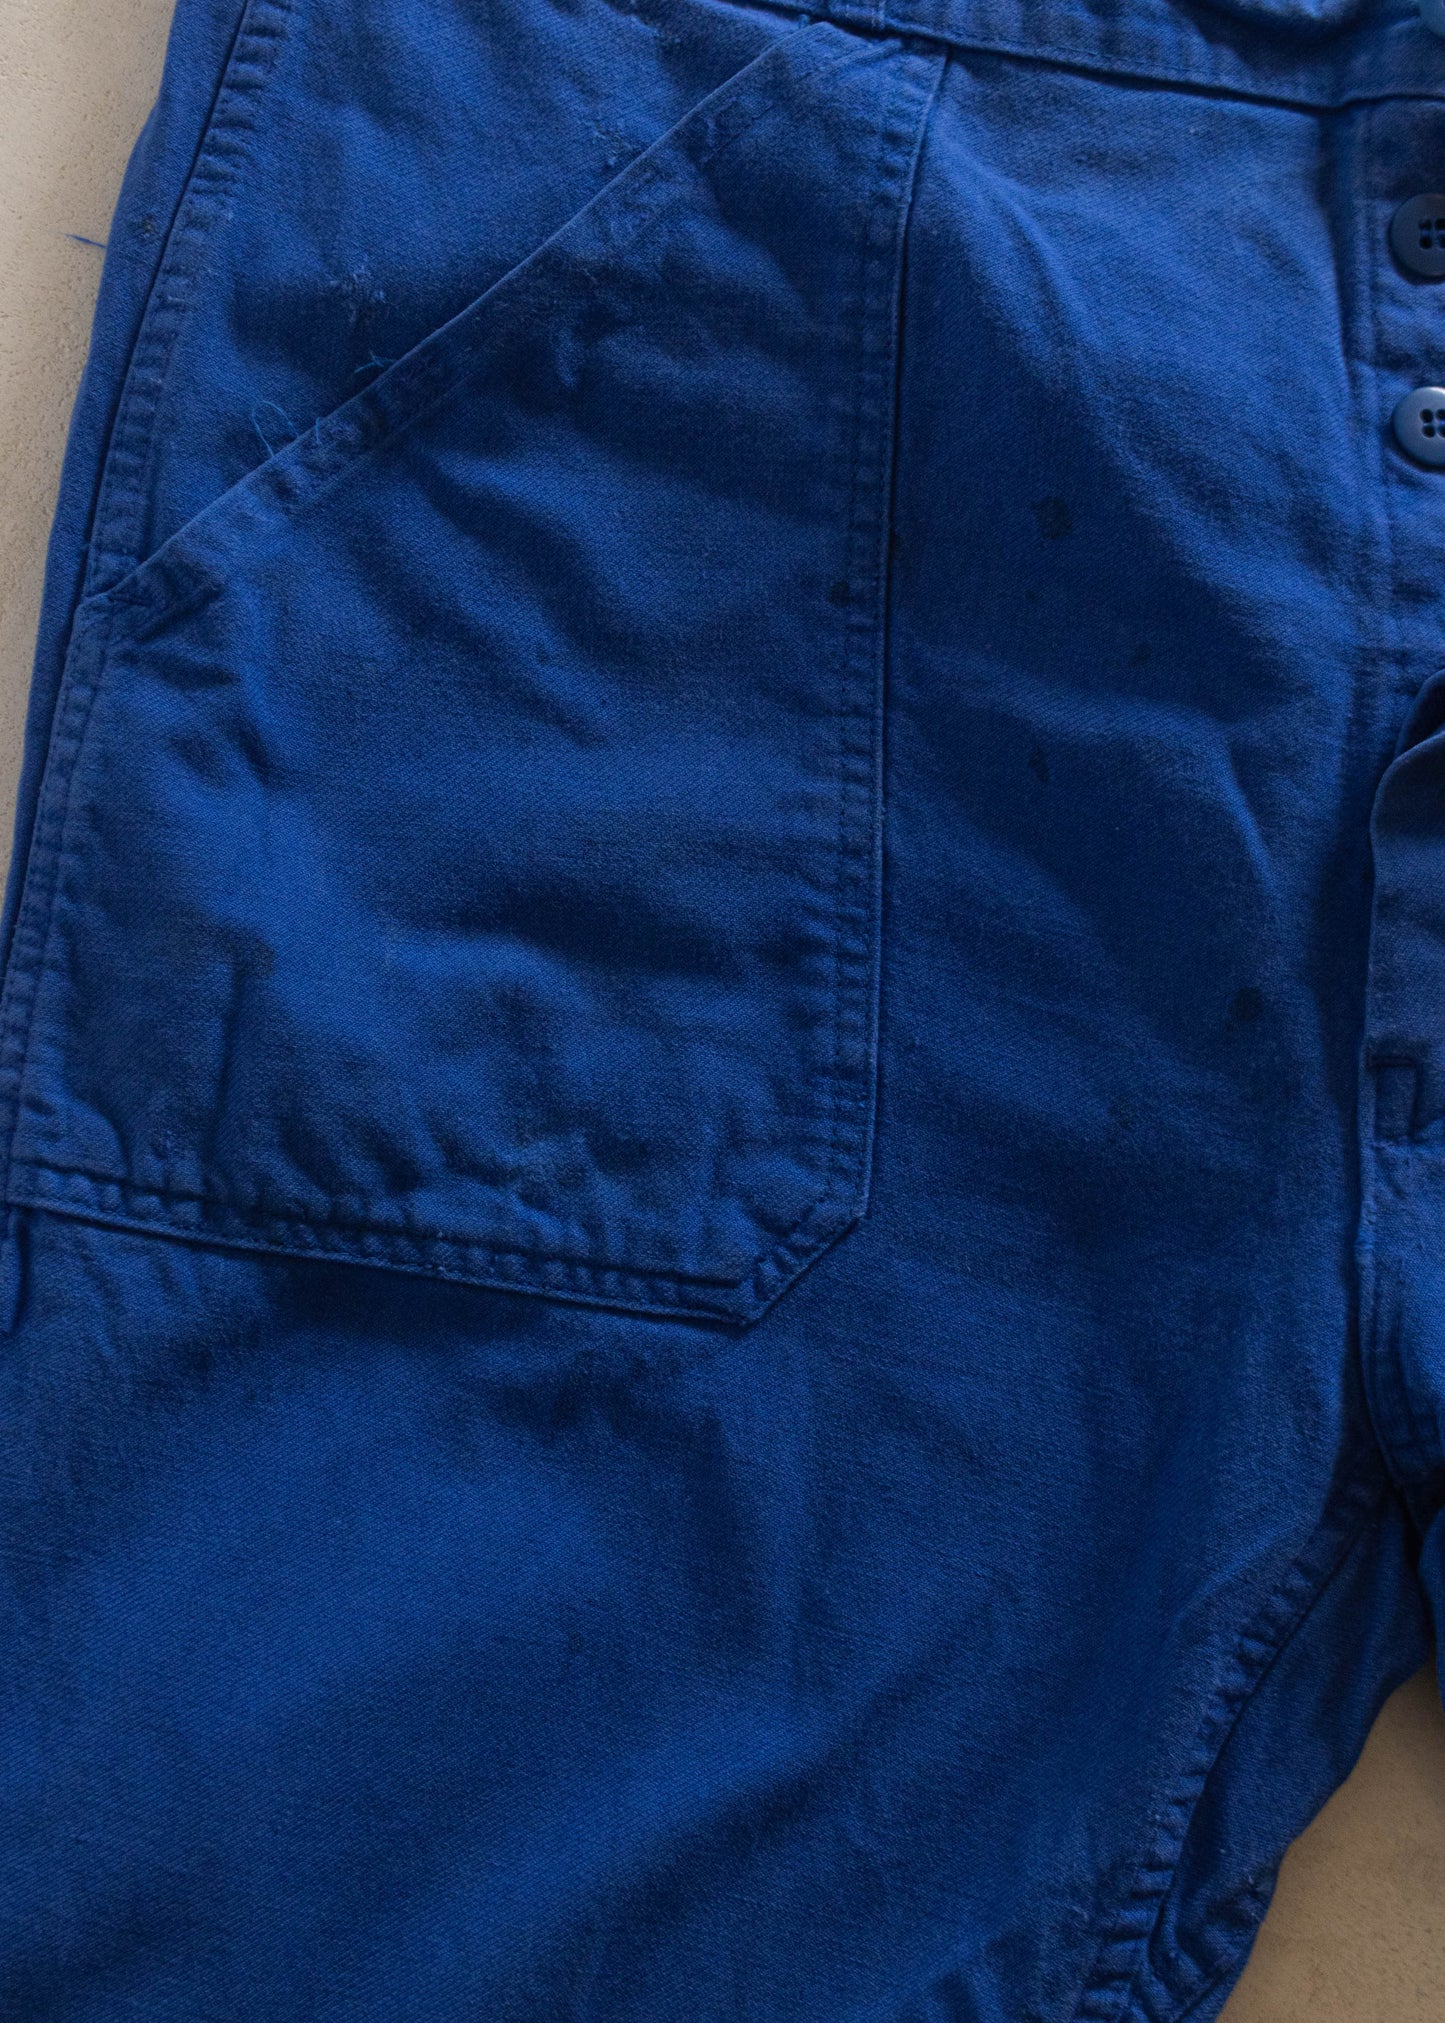 1980s French Workwear Chore Pants Size Women's 34 Men's 36